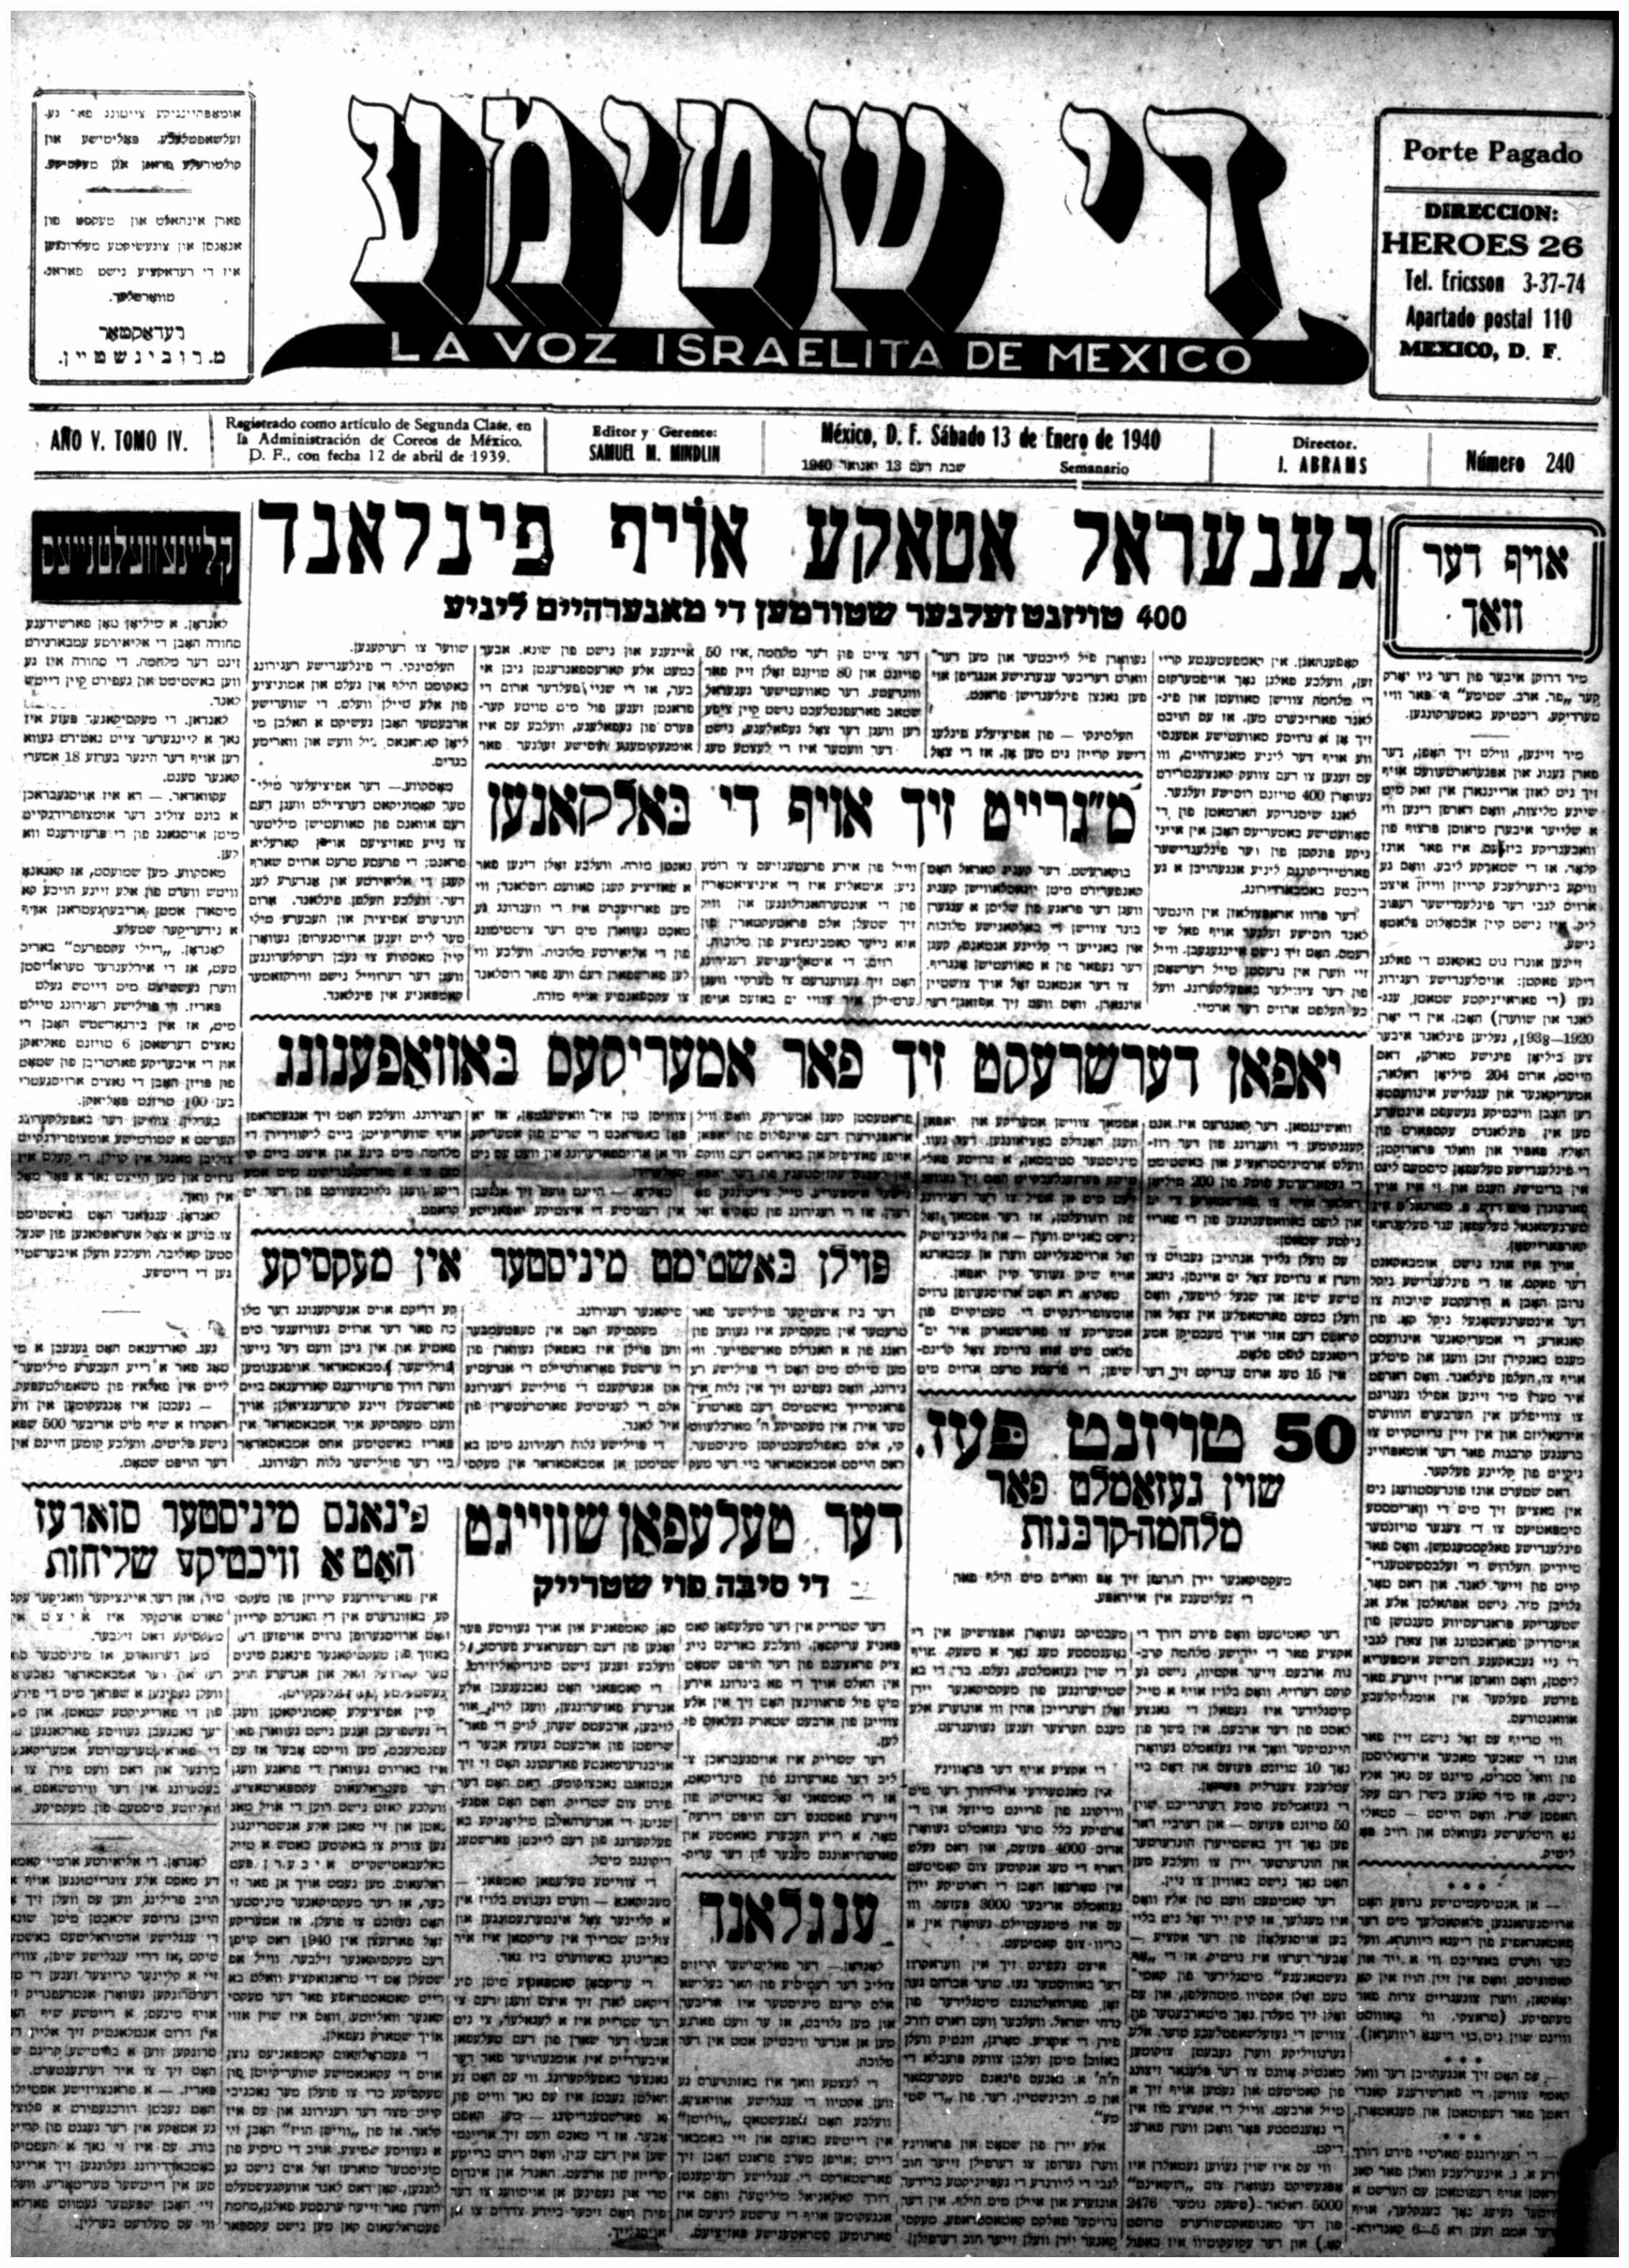 Fifty thousand pesos already collected for the war victims, Di shtime/La Voz Israelita de Mexico, newspaper article 1940